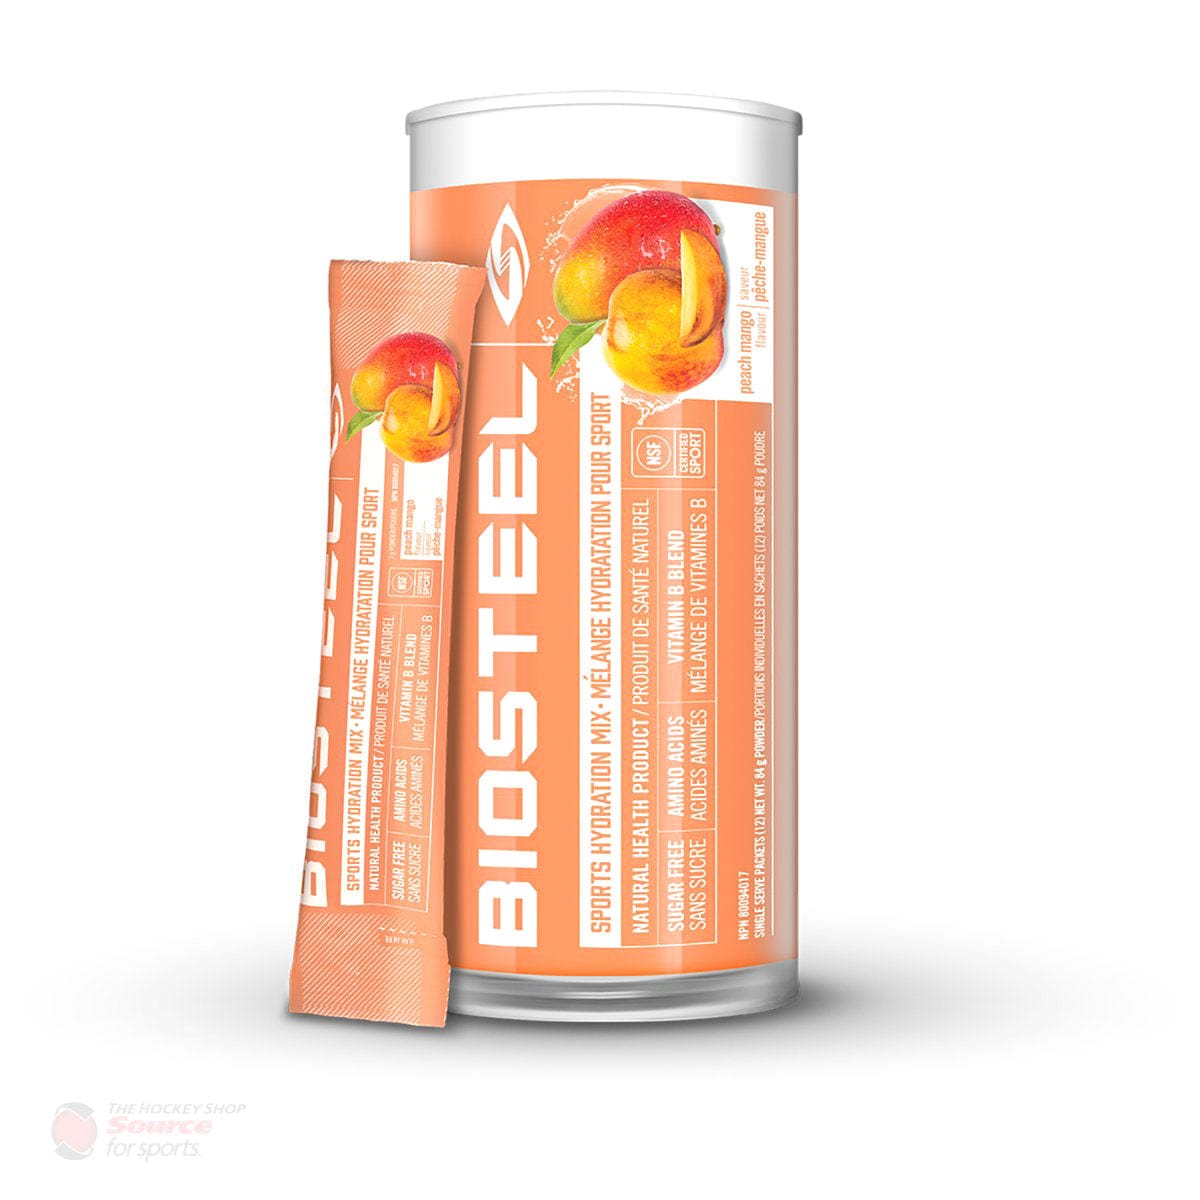 BioSteel High Performance Sports Mix - Peach Mango (12 Packets)